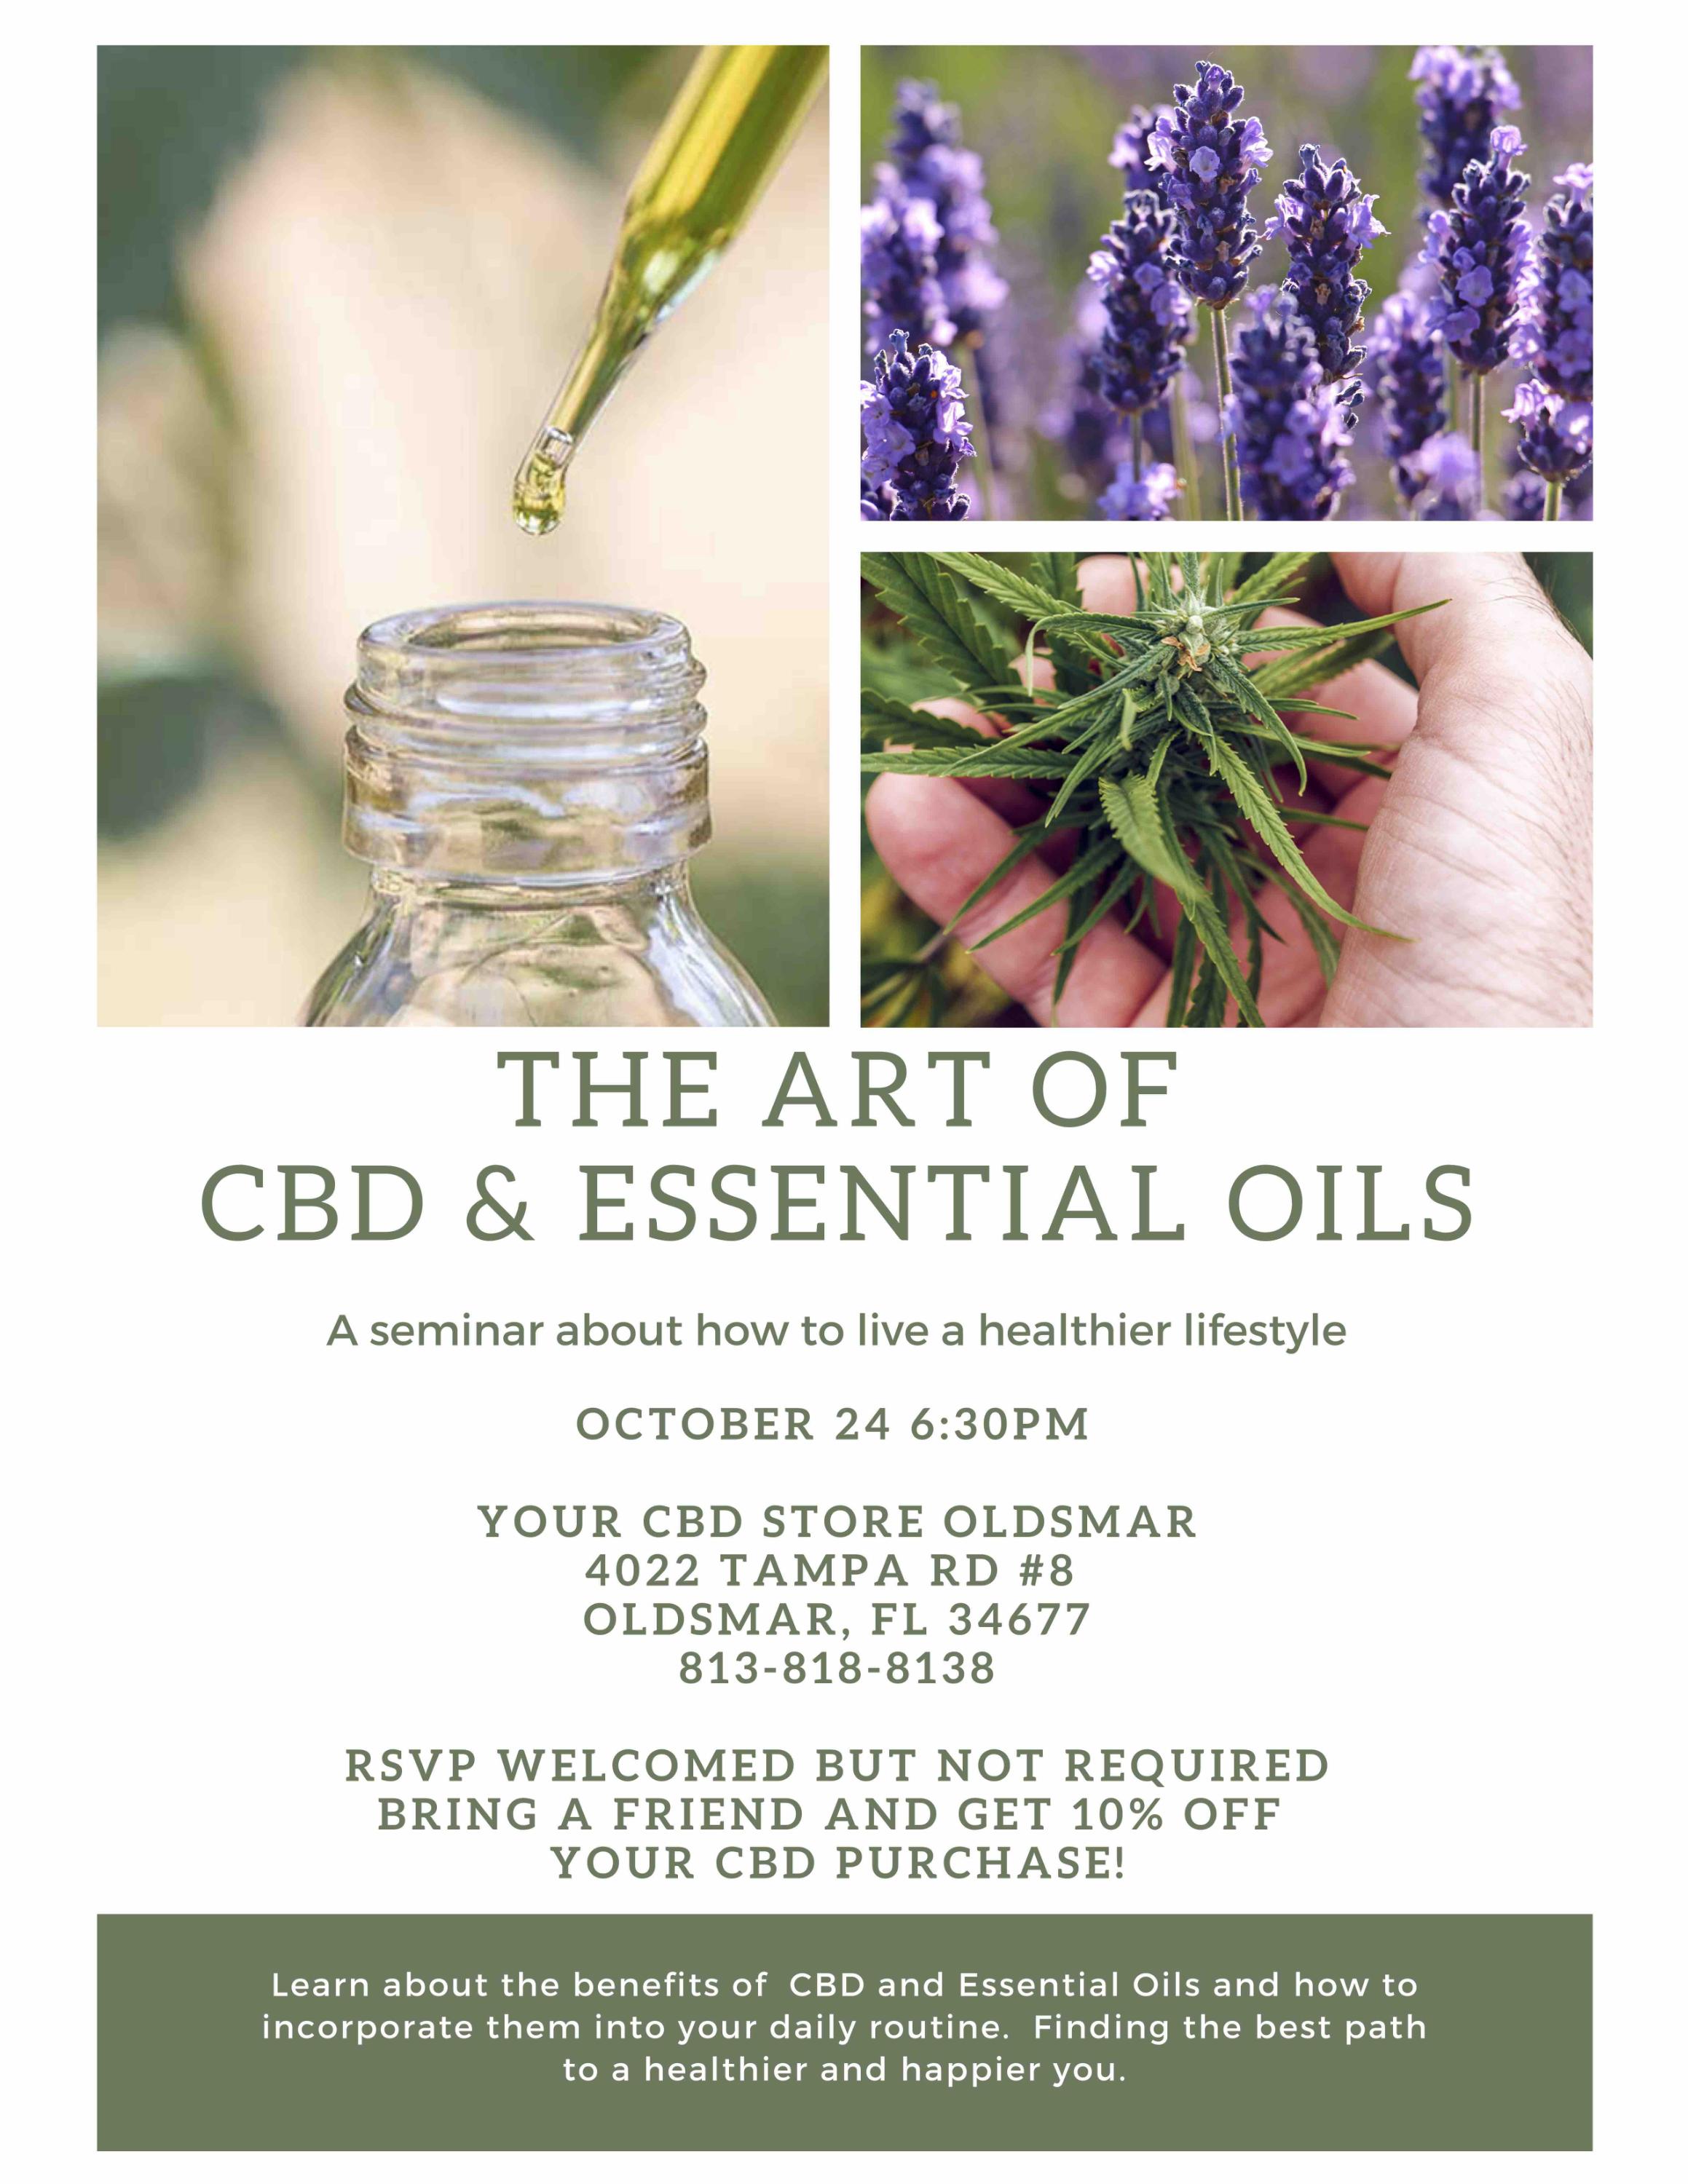 The Art of CBD & Essential Oils